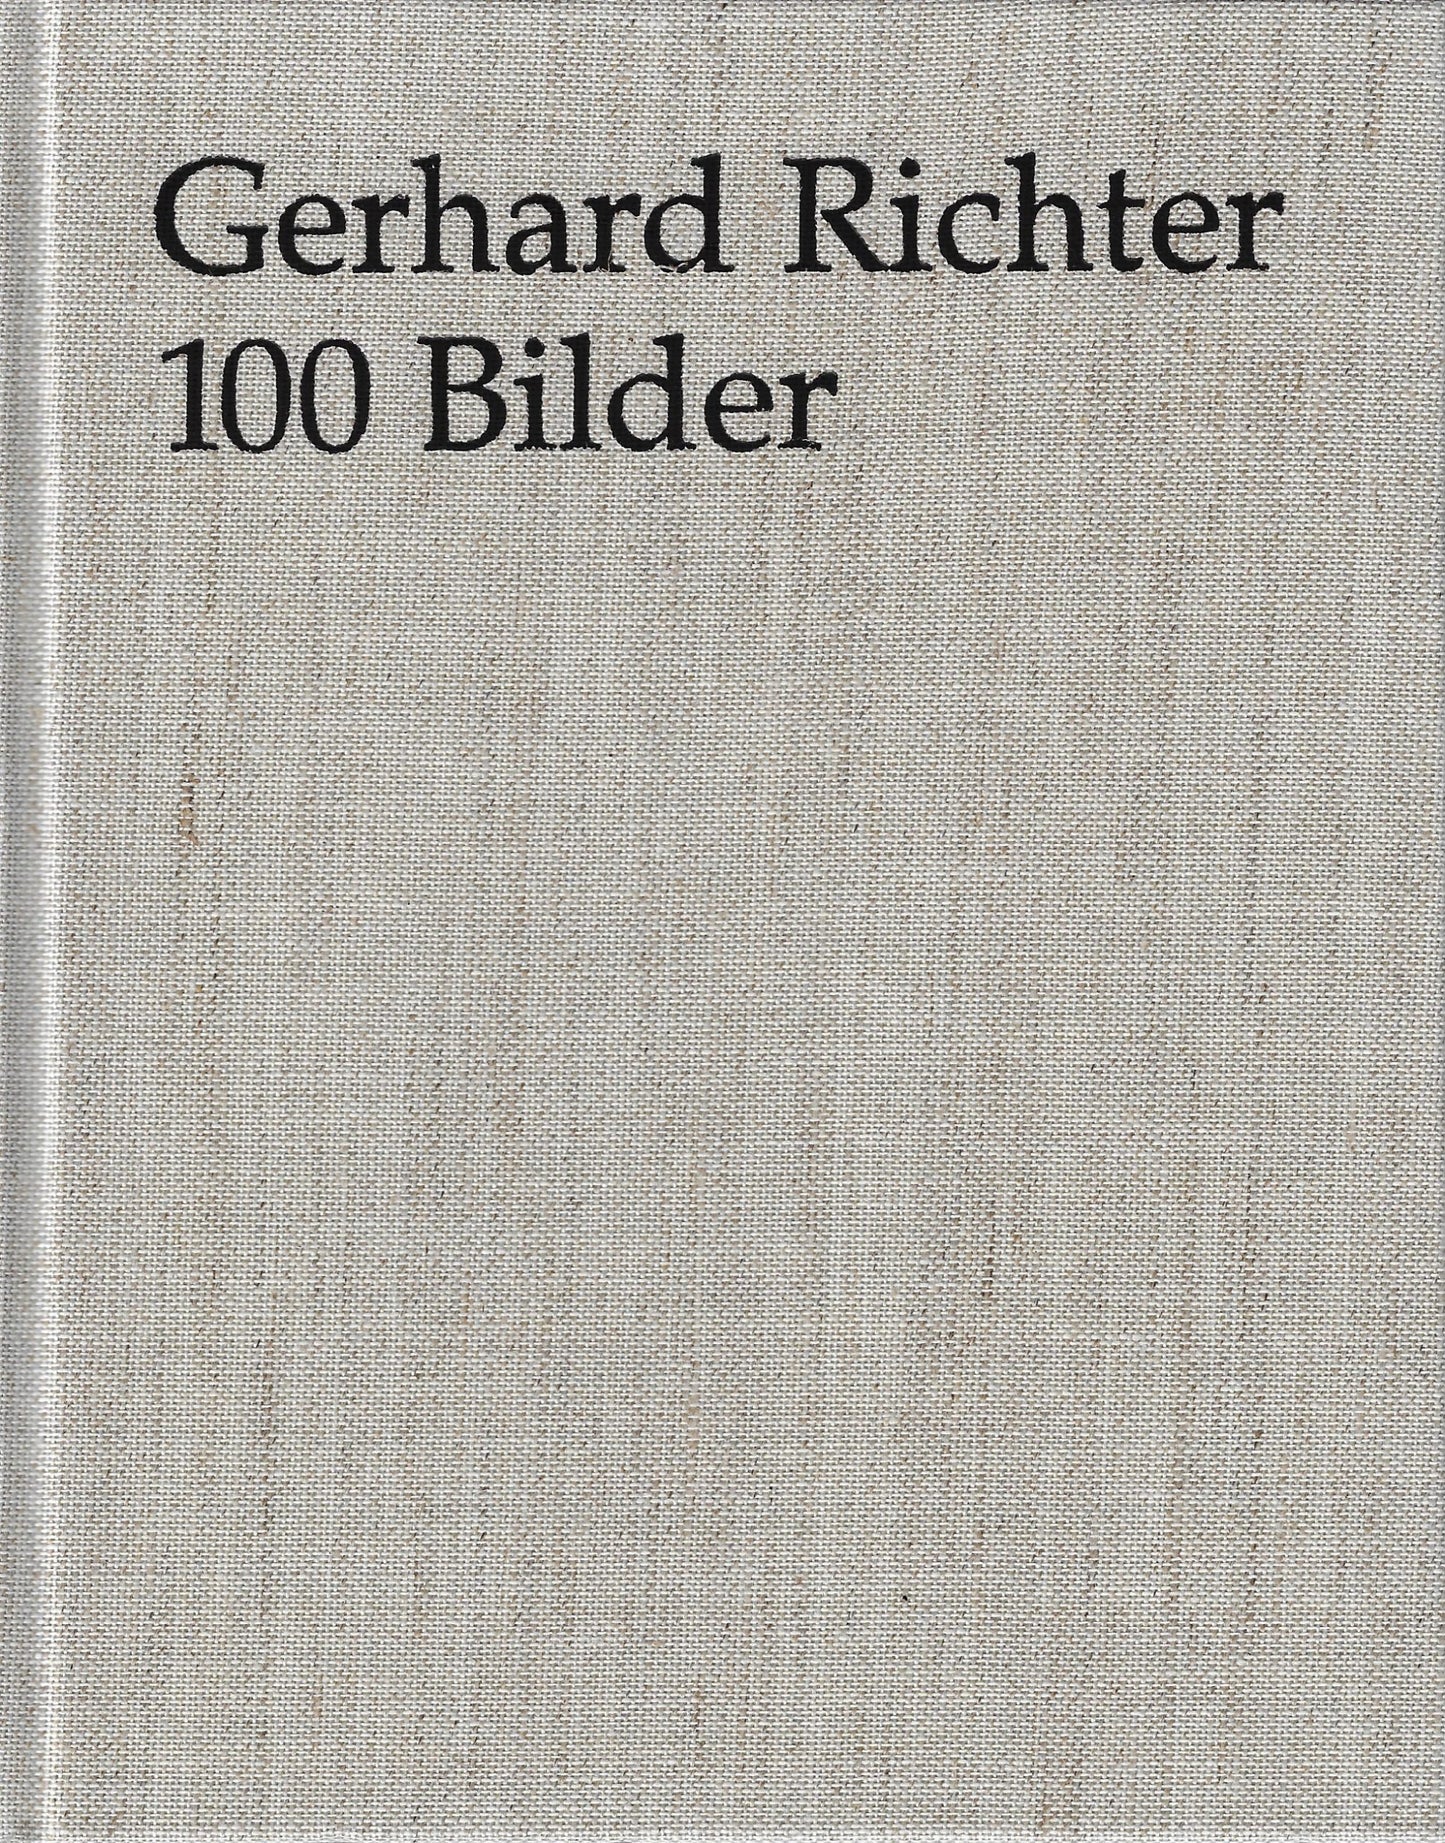 Gerhard Richter / 100 Pictures